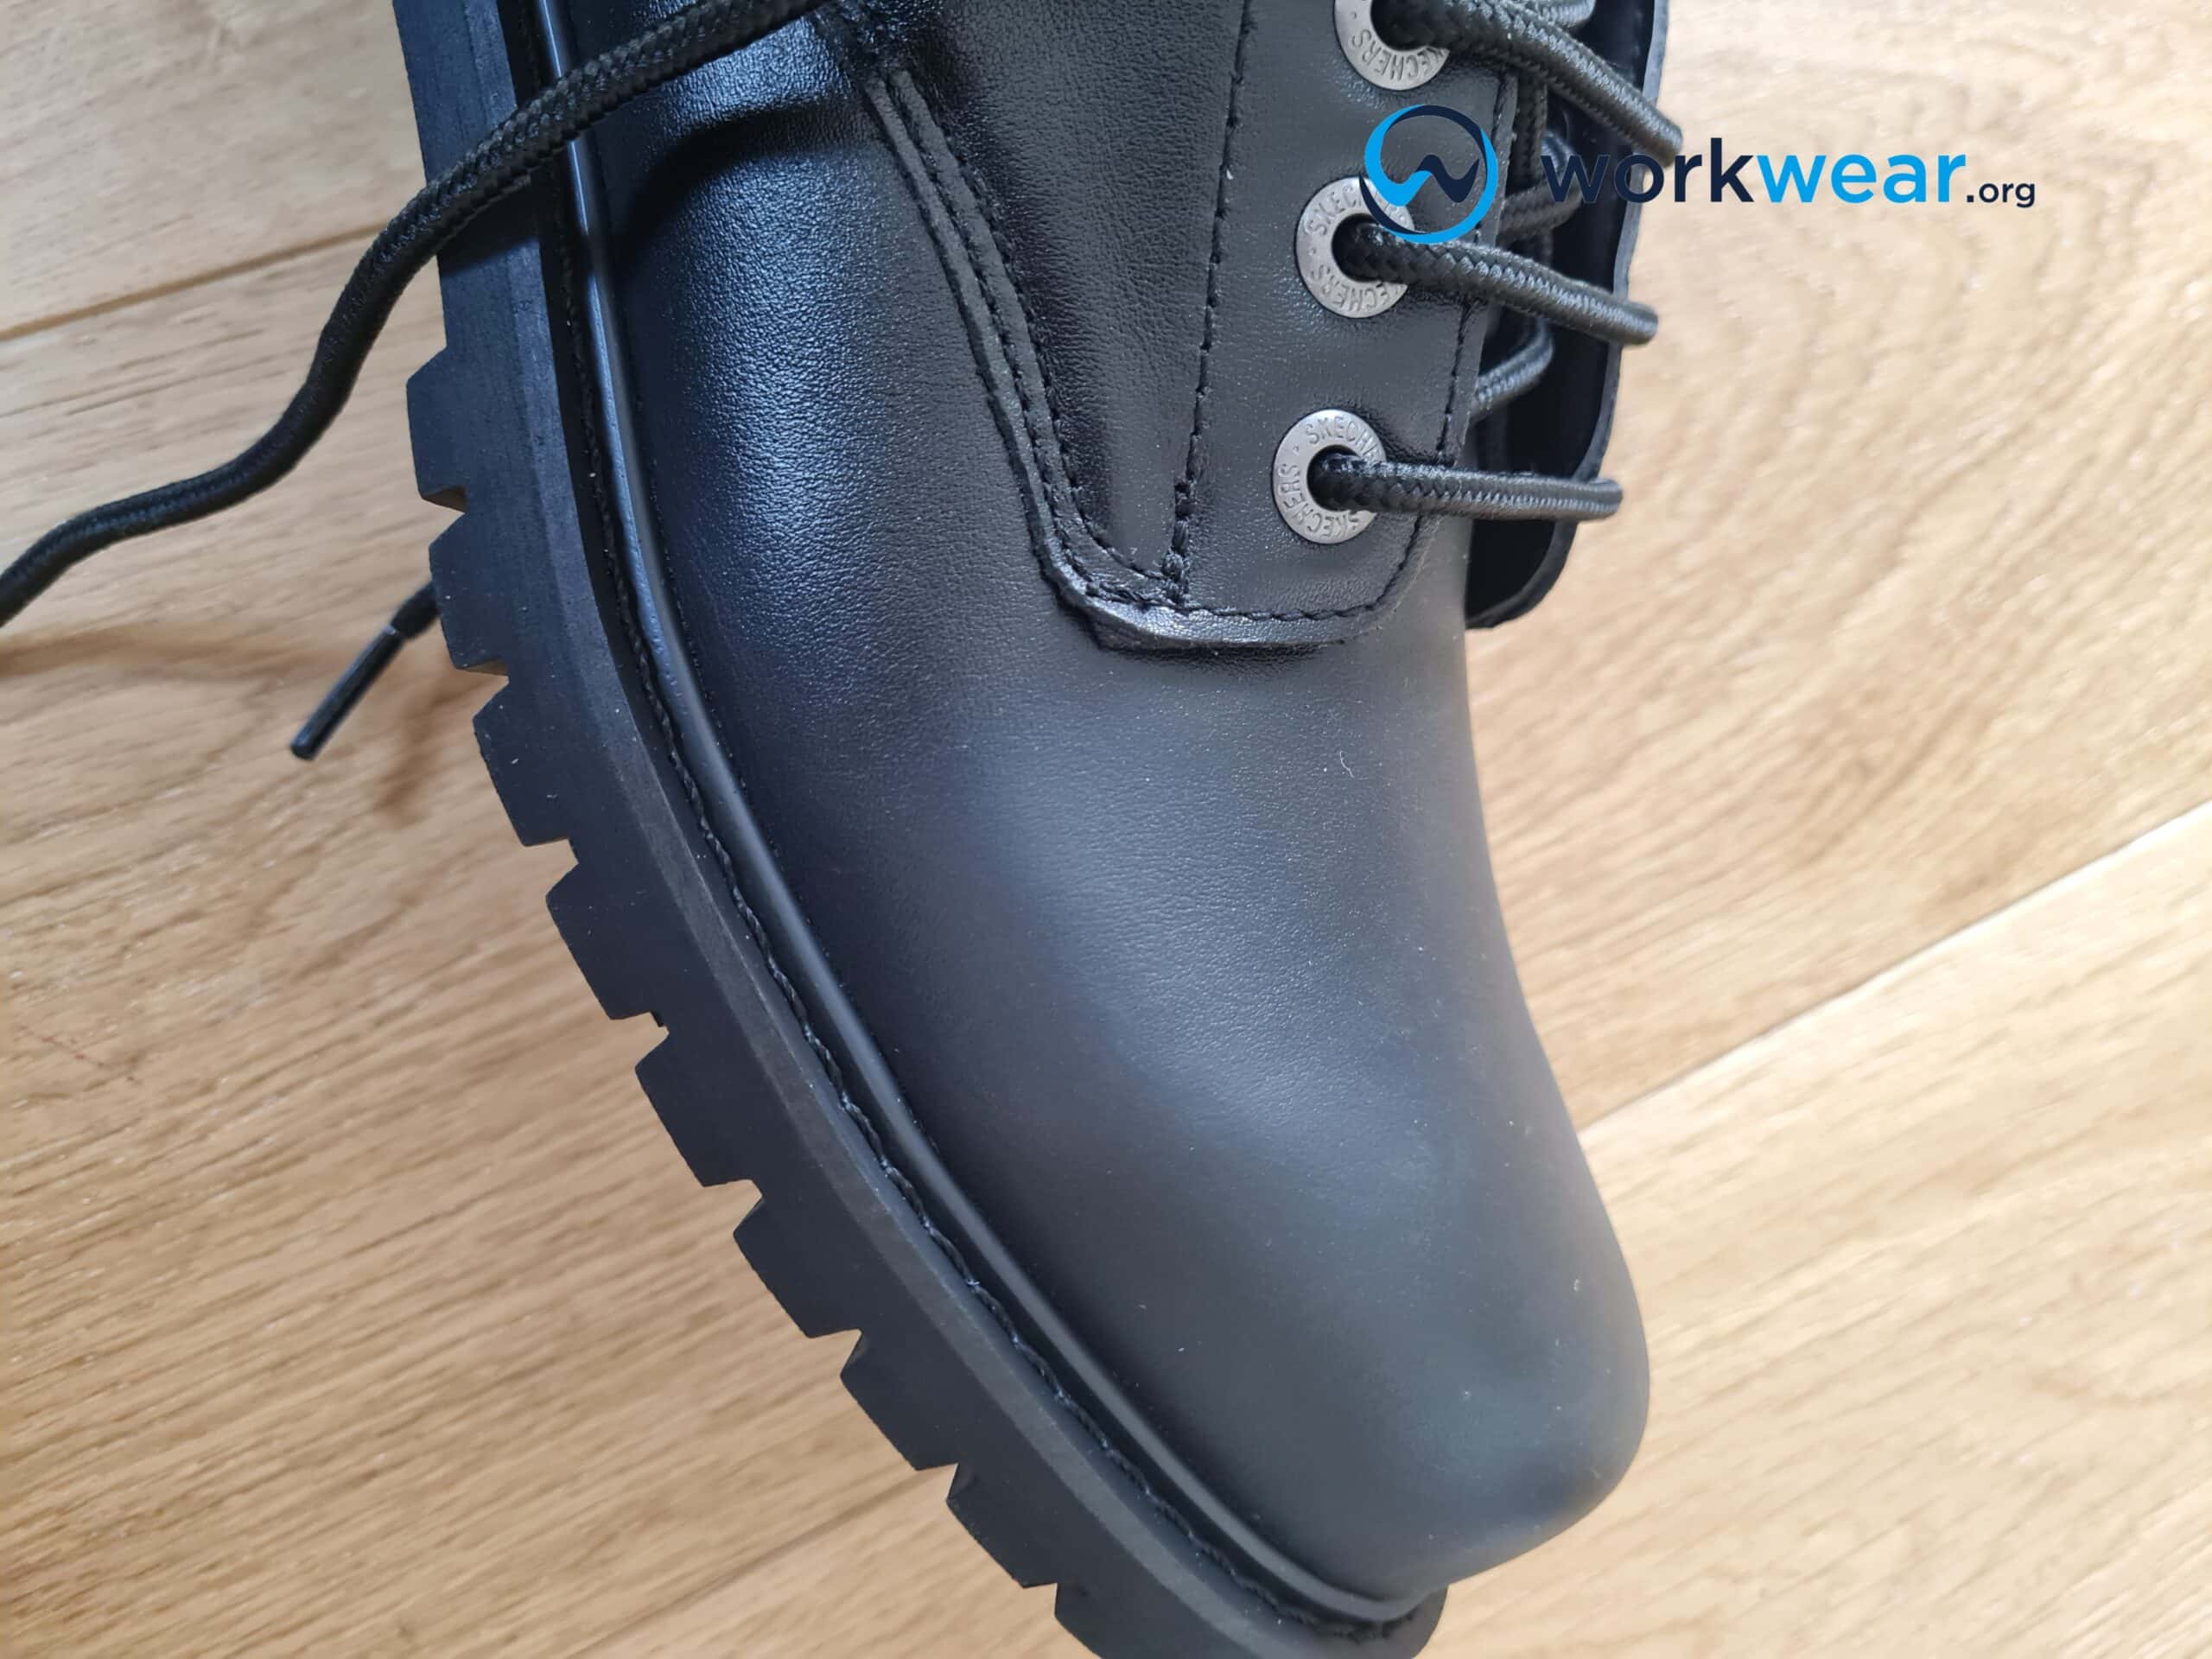 Skechers for Work Cottonwood Elks – A Detailed Slip-Resistant Shoe Review